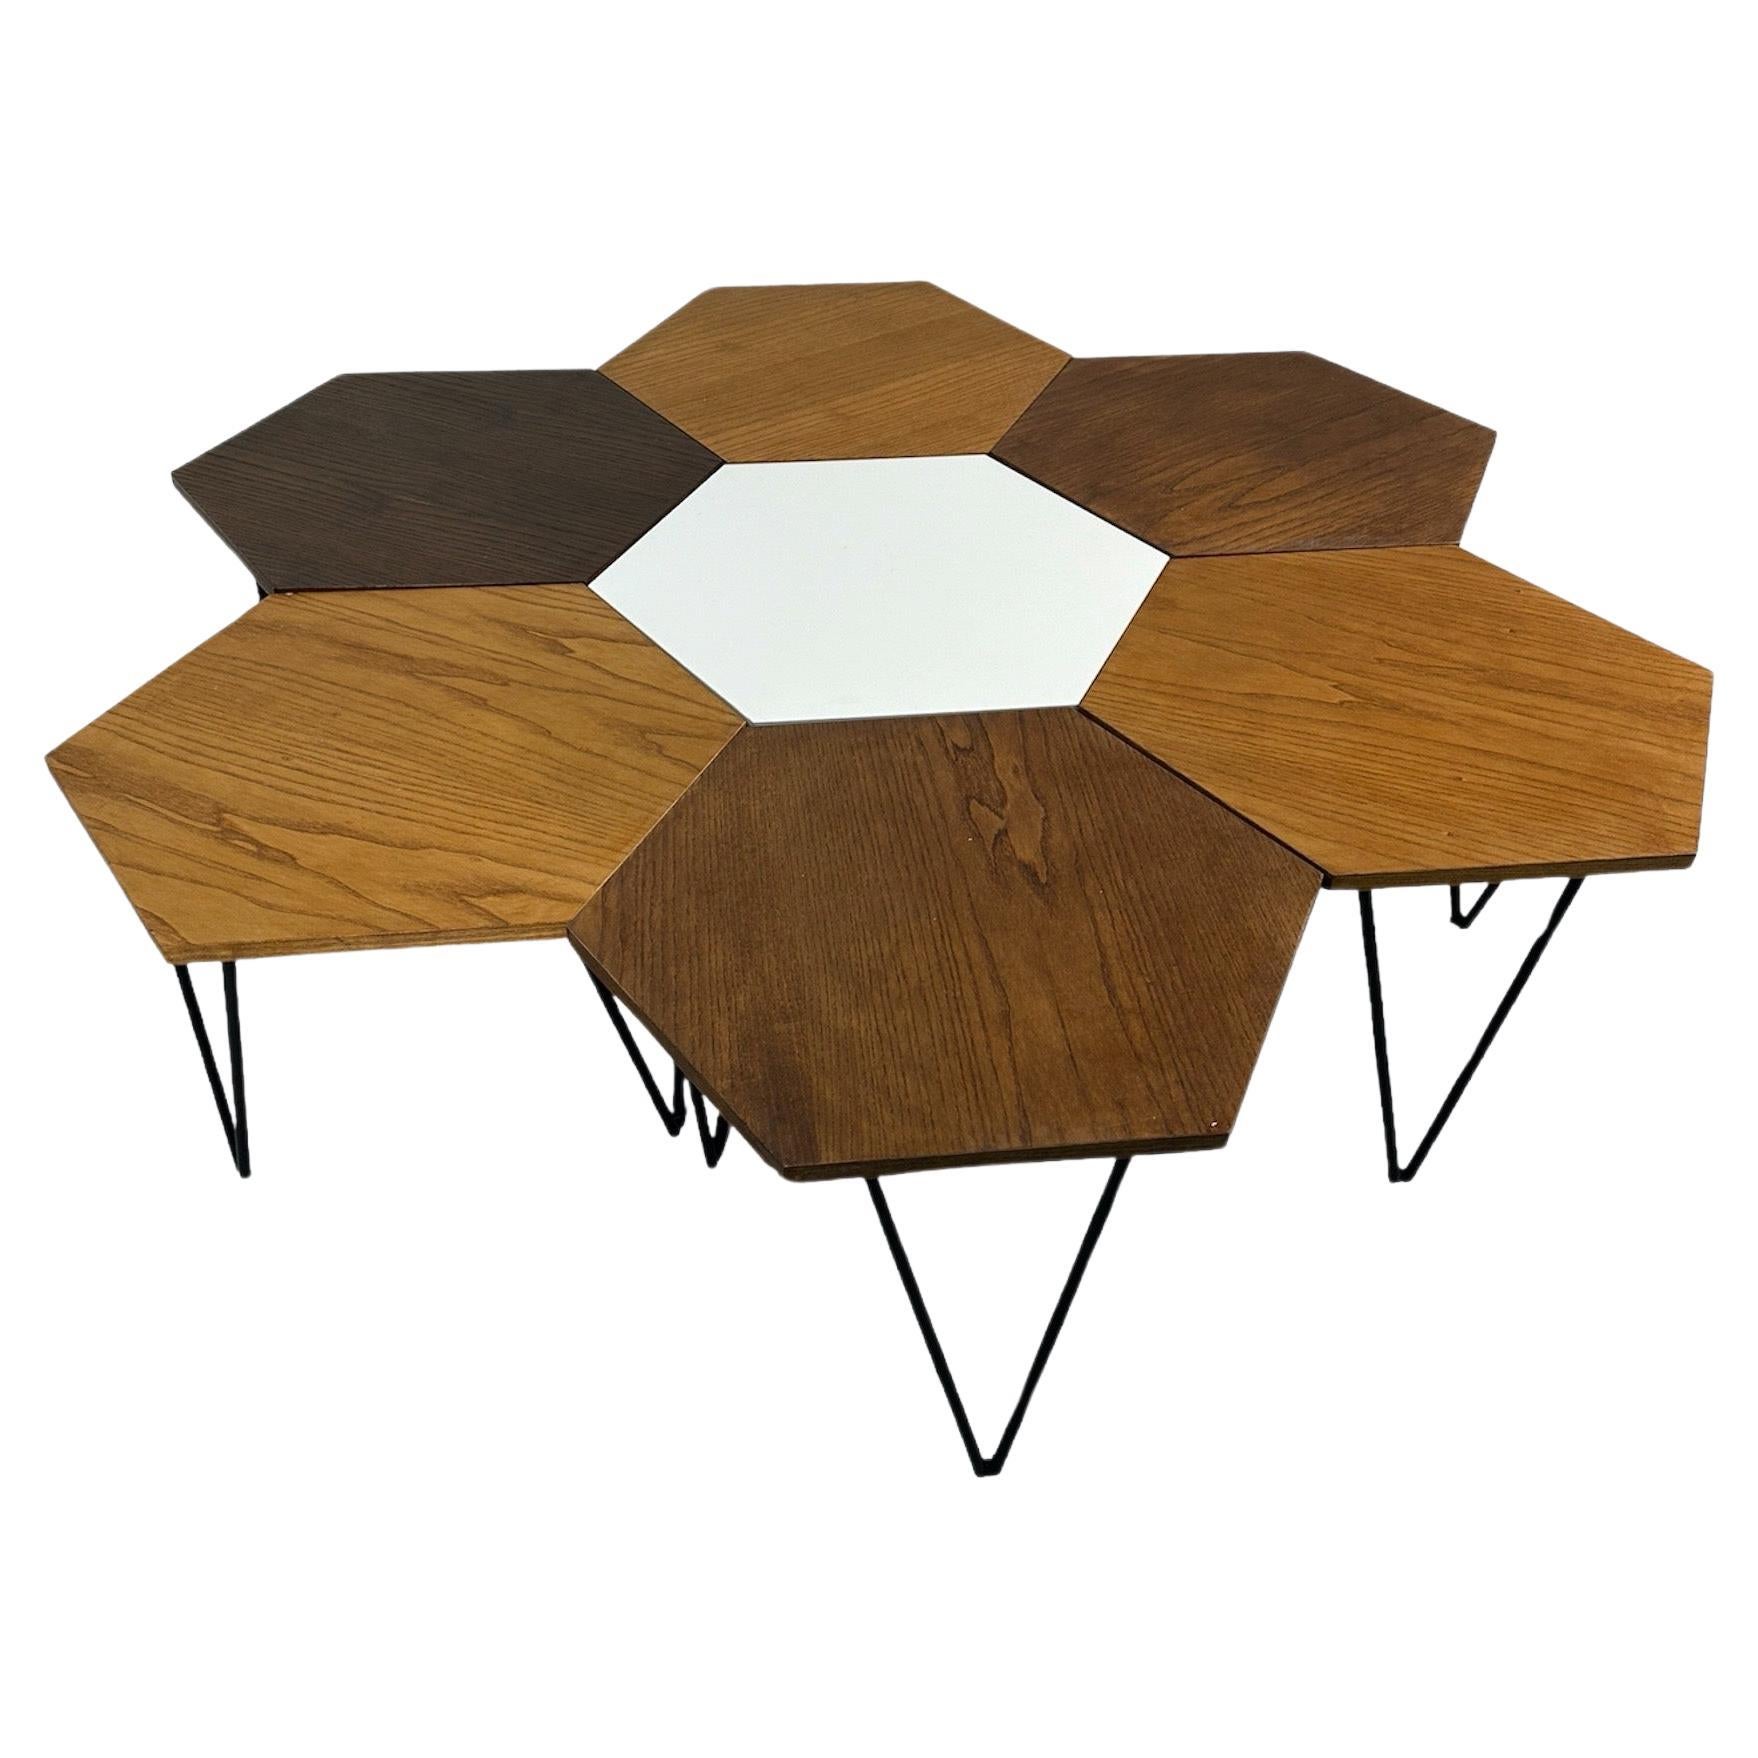 Ensemble de 7 tables basses modulaires hexagonales Gio Ponti, ISA Bergamo, Italie, années 1950 en vente